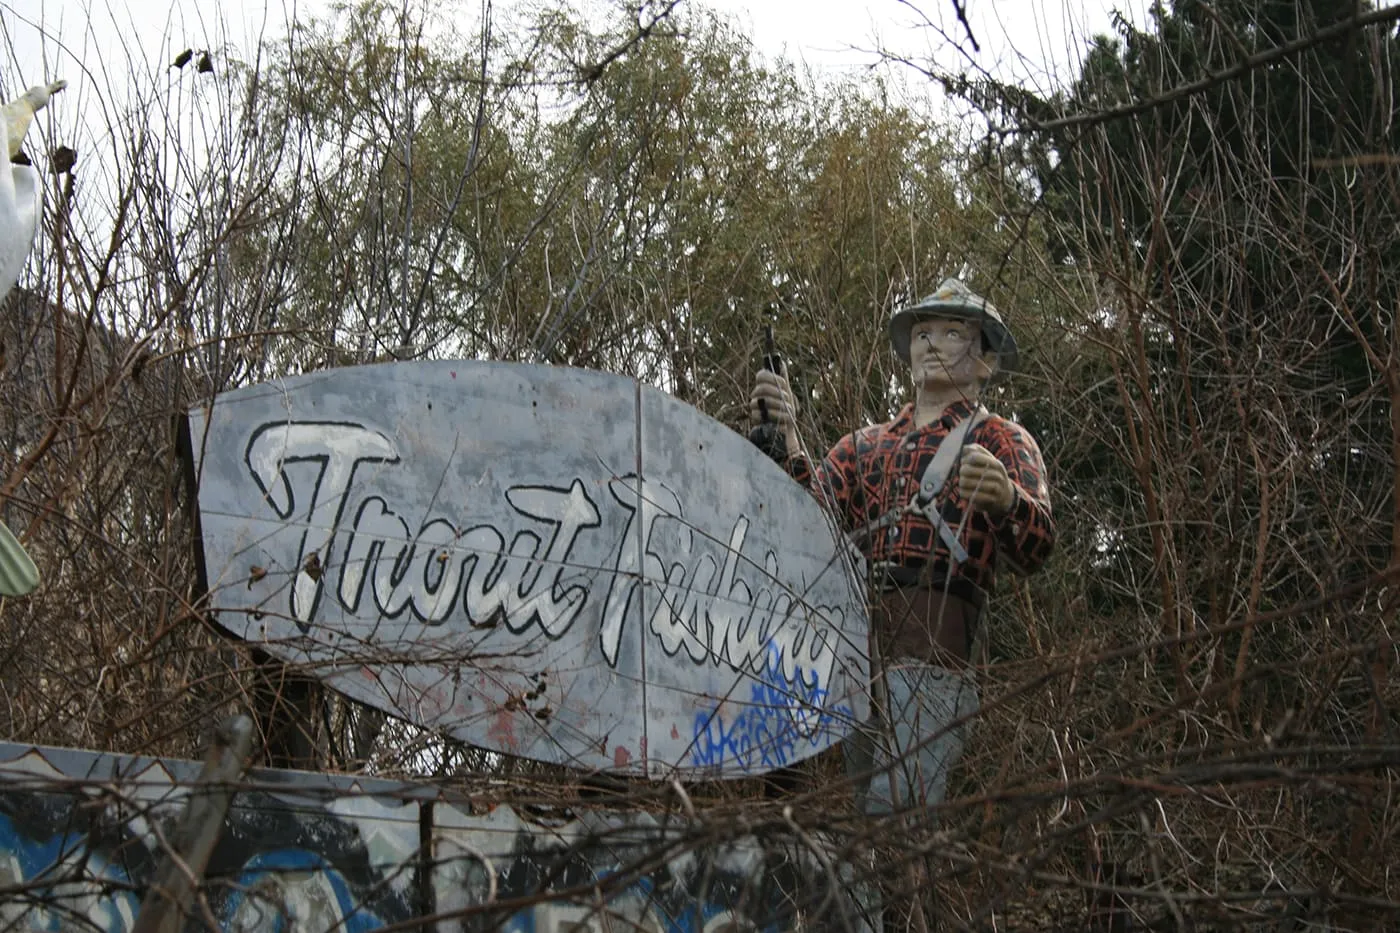 Hidden Trout Fisherman Statue, a roadside attraction in Niles/Des Plaines, Illinois